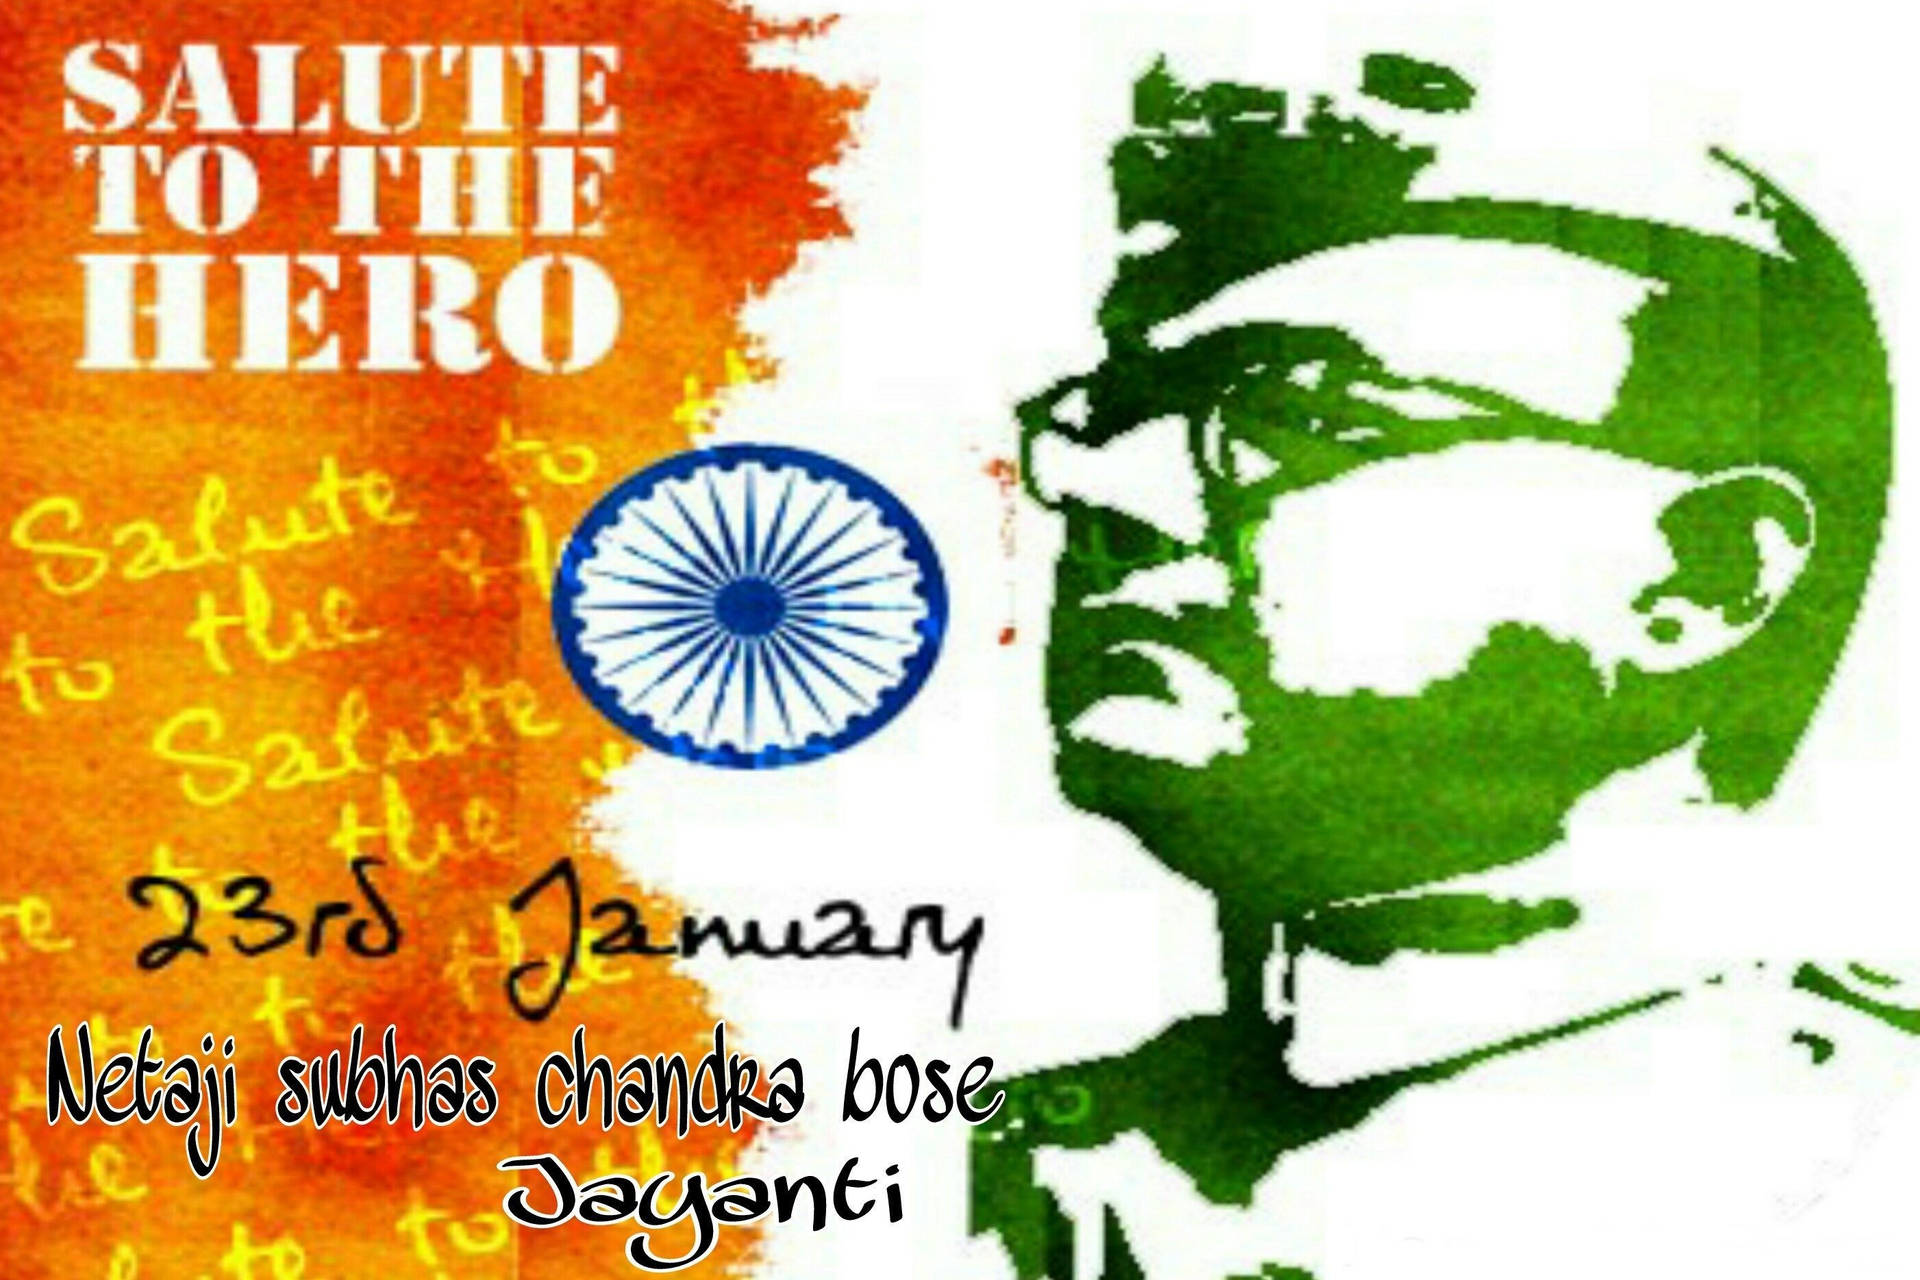 Salute To The Hero Netaji Background